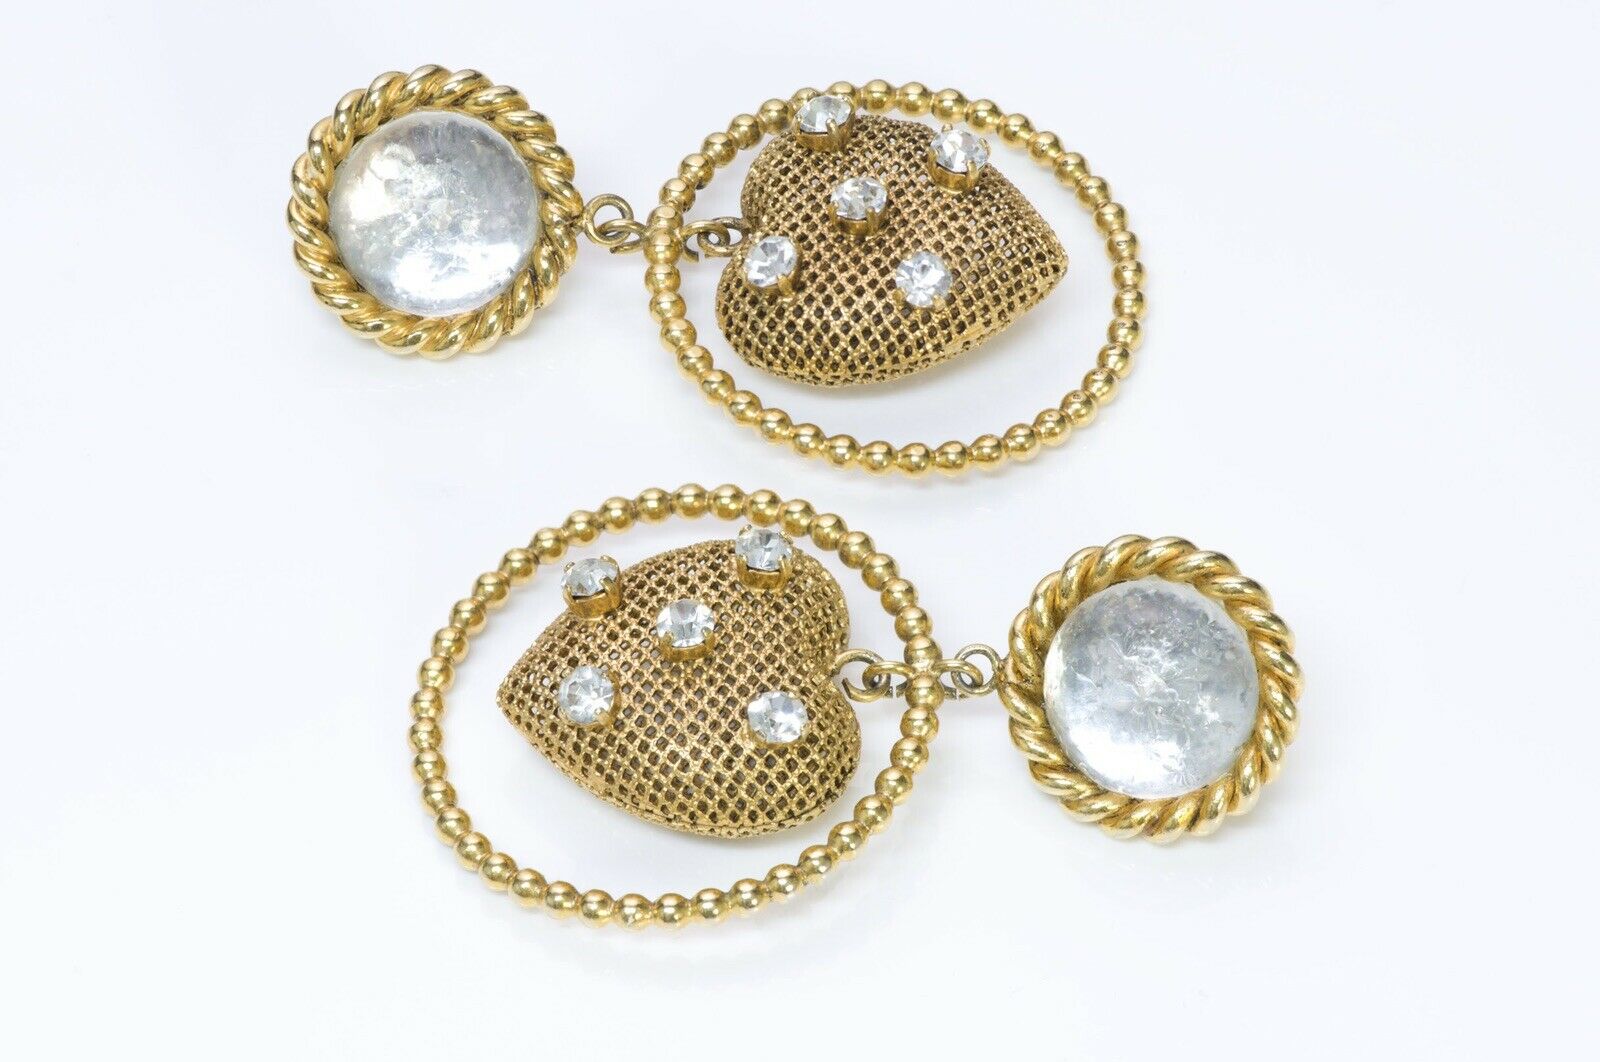 Vintage 1980’s French Glass Crystal Heart Hoop Earrings